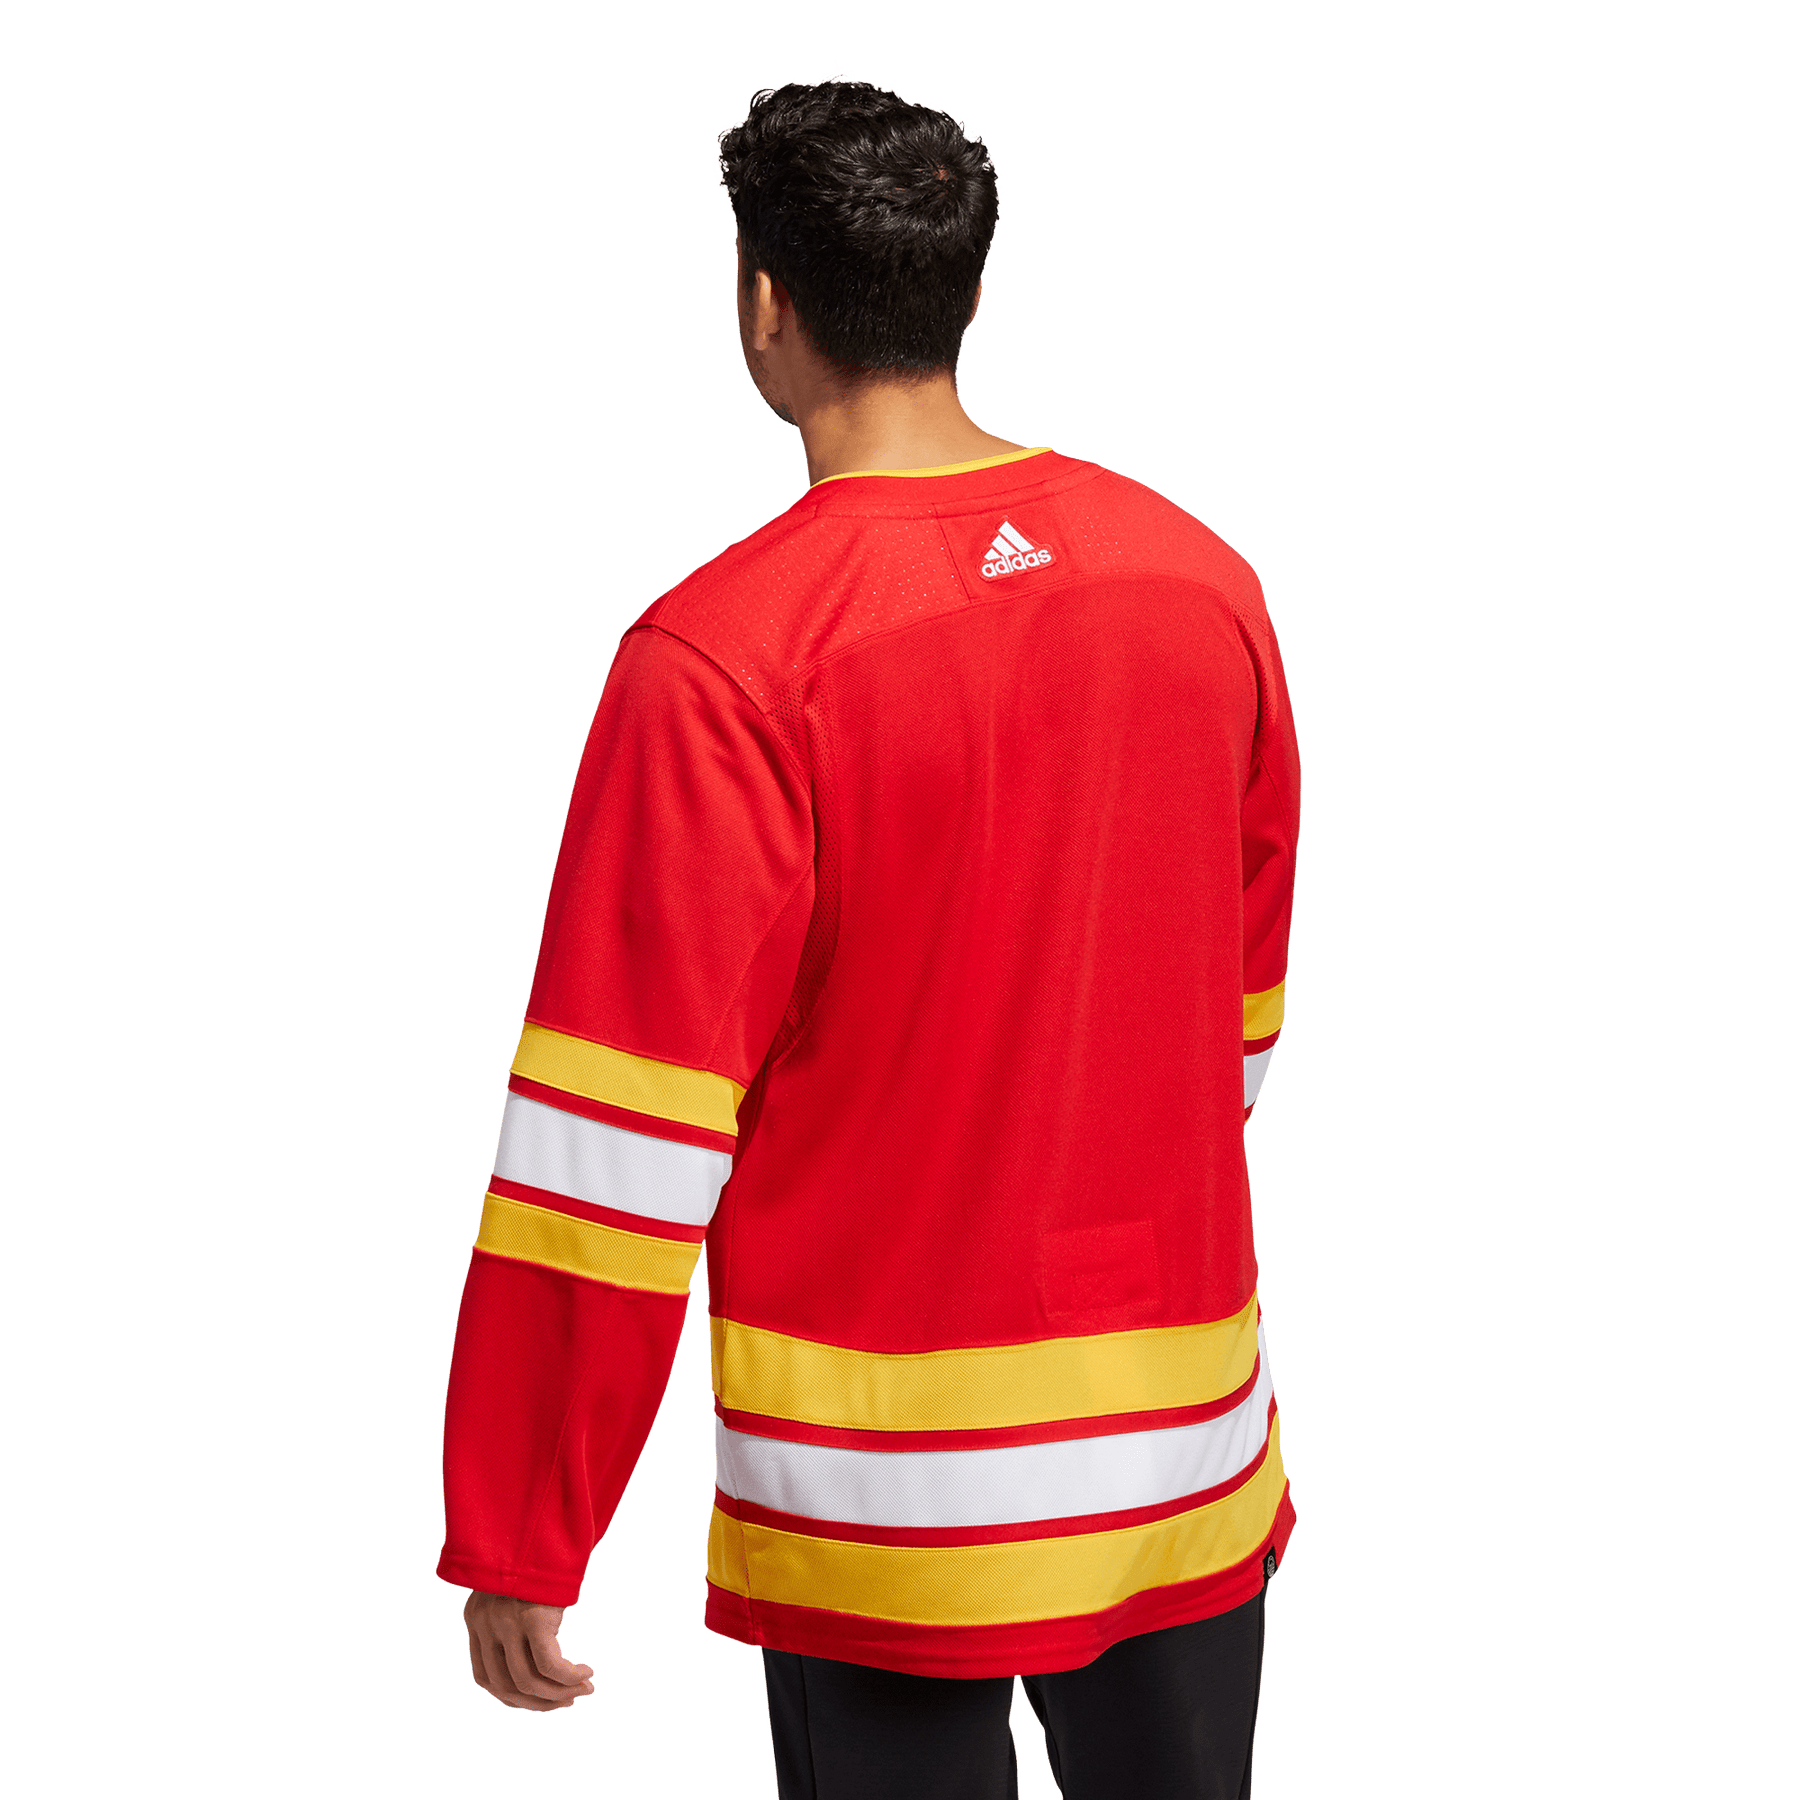 Customizable Calgary Flames Adidas Primegreen Authentic NHL Hockey Jersey - Home / XXL/56